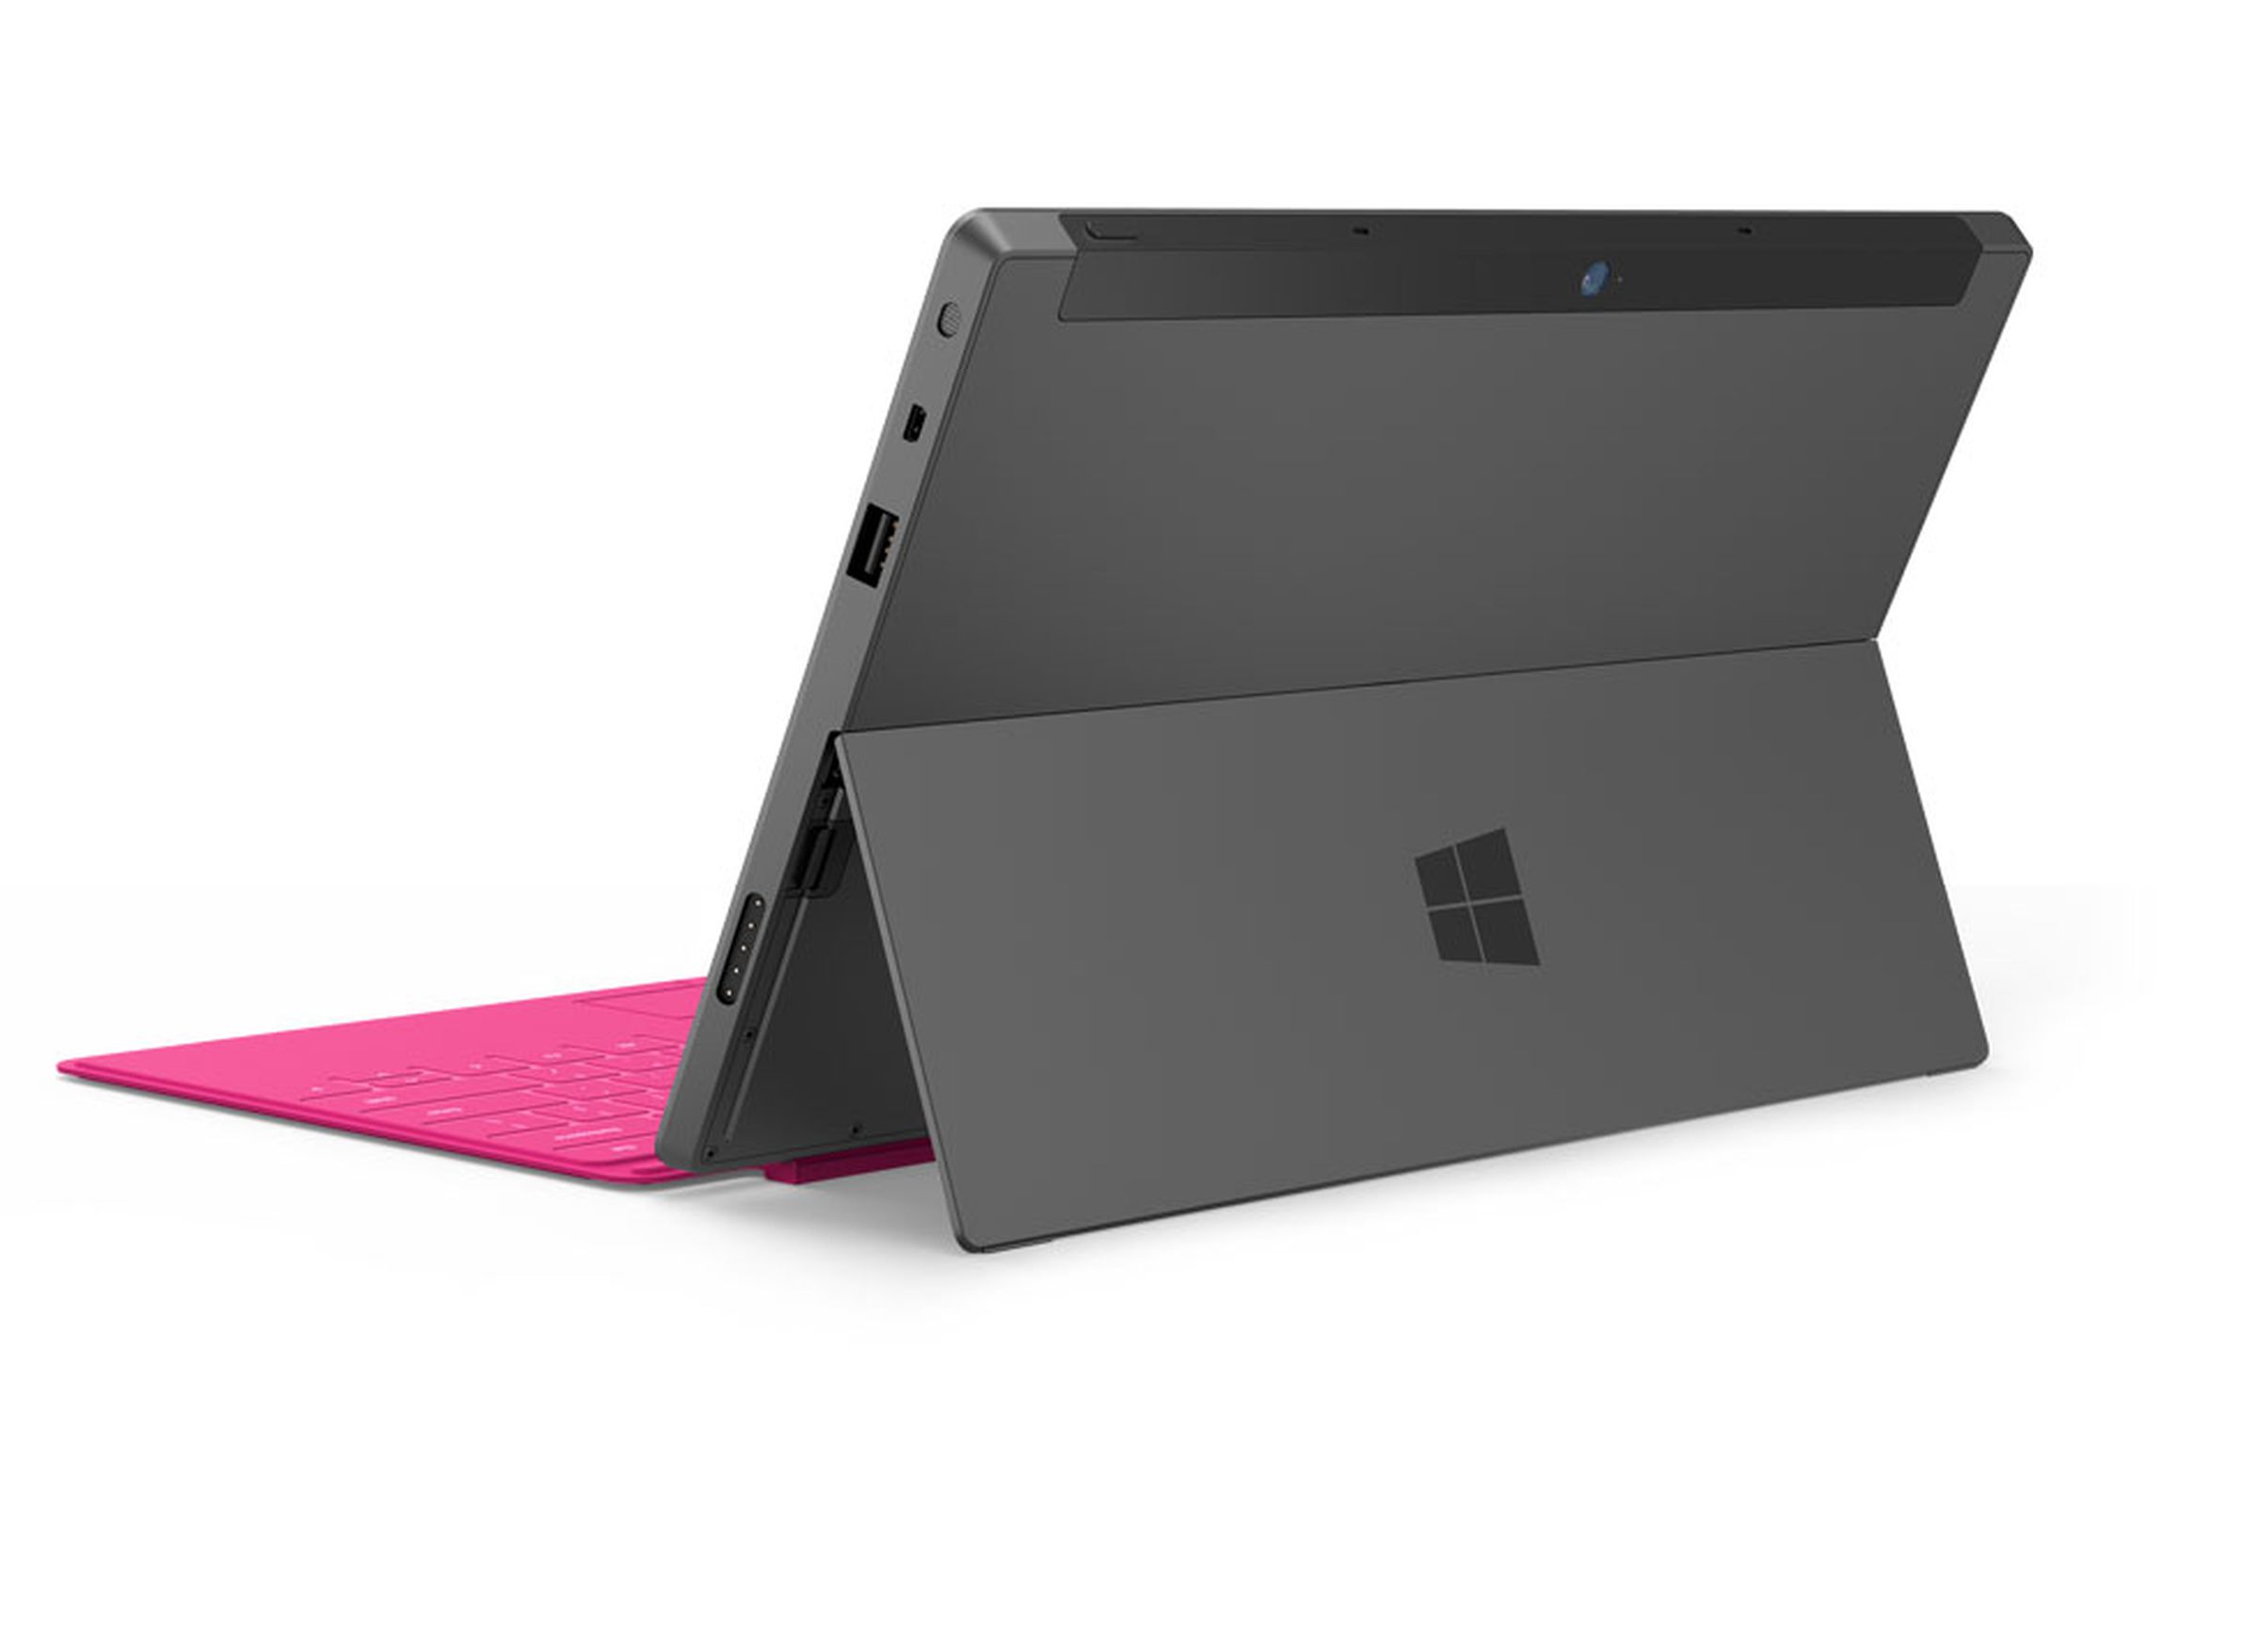 Microsoft Surface tablet press photos